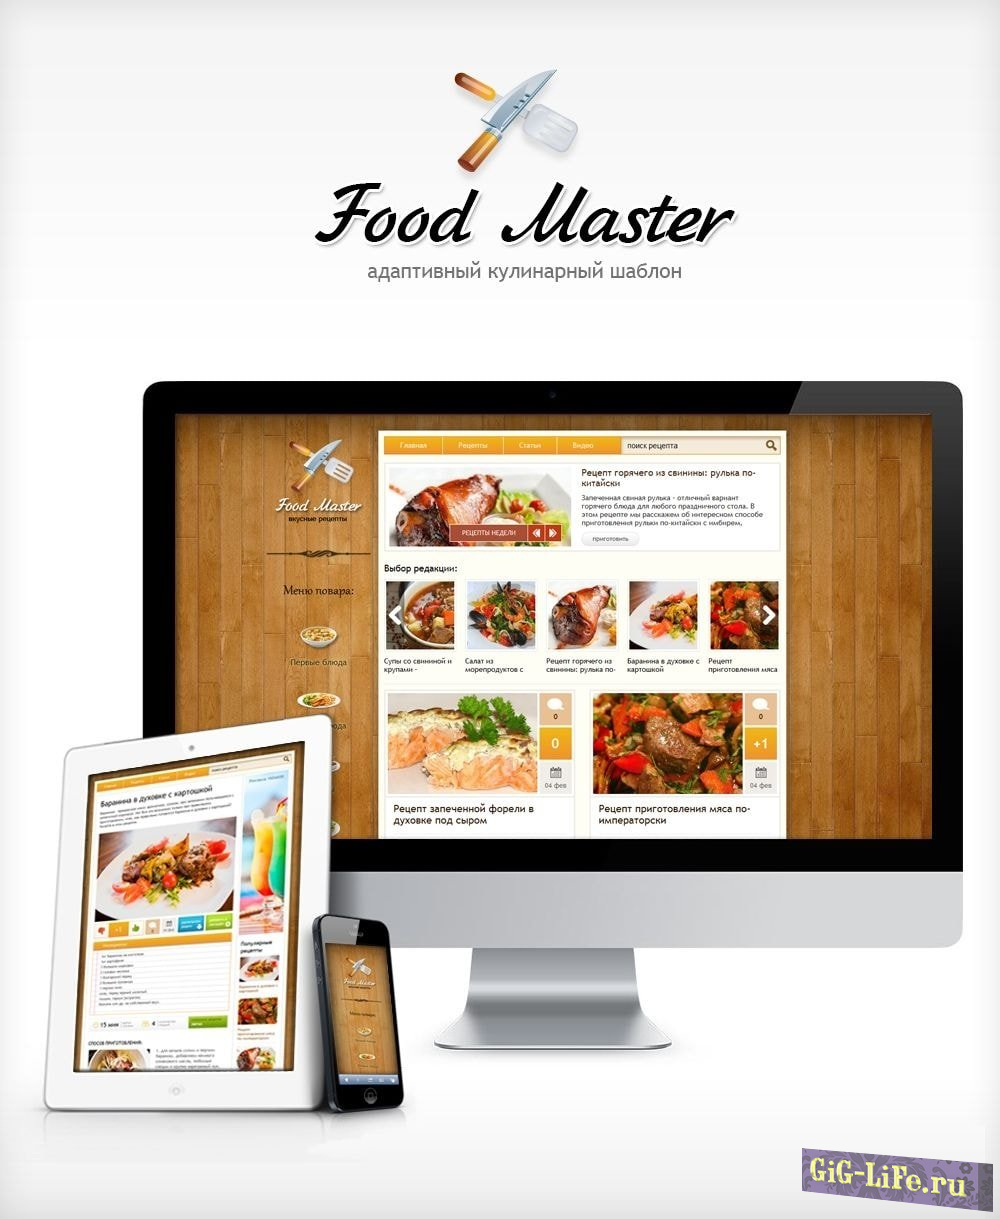 Food Master - адаптивный шаблон для кулинарных сайтов [DLE 10.5 - 12.0]